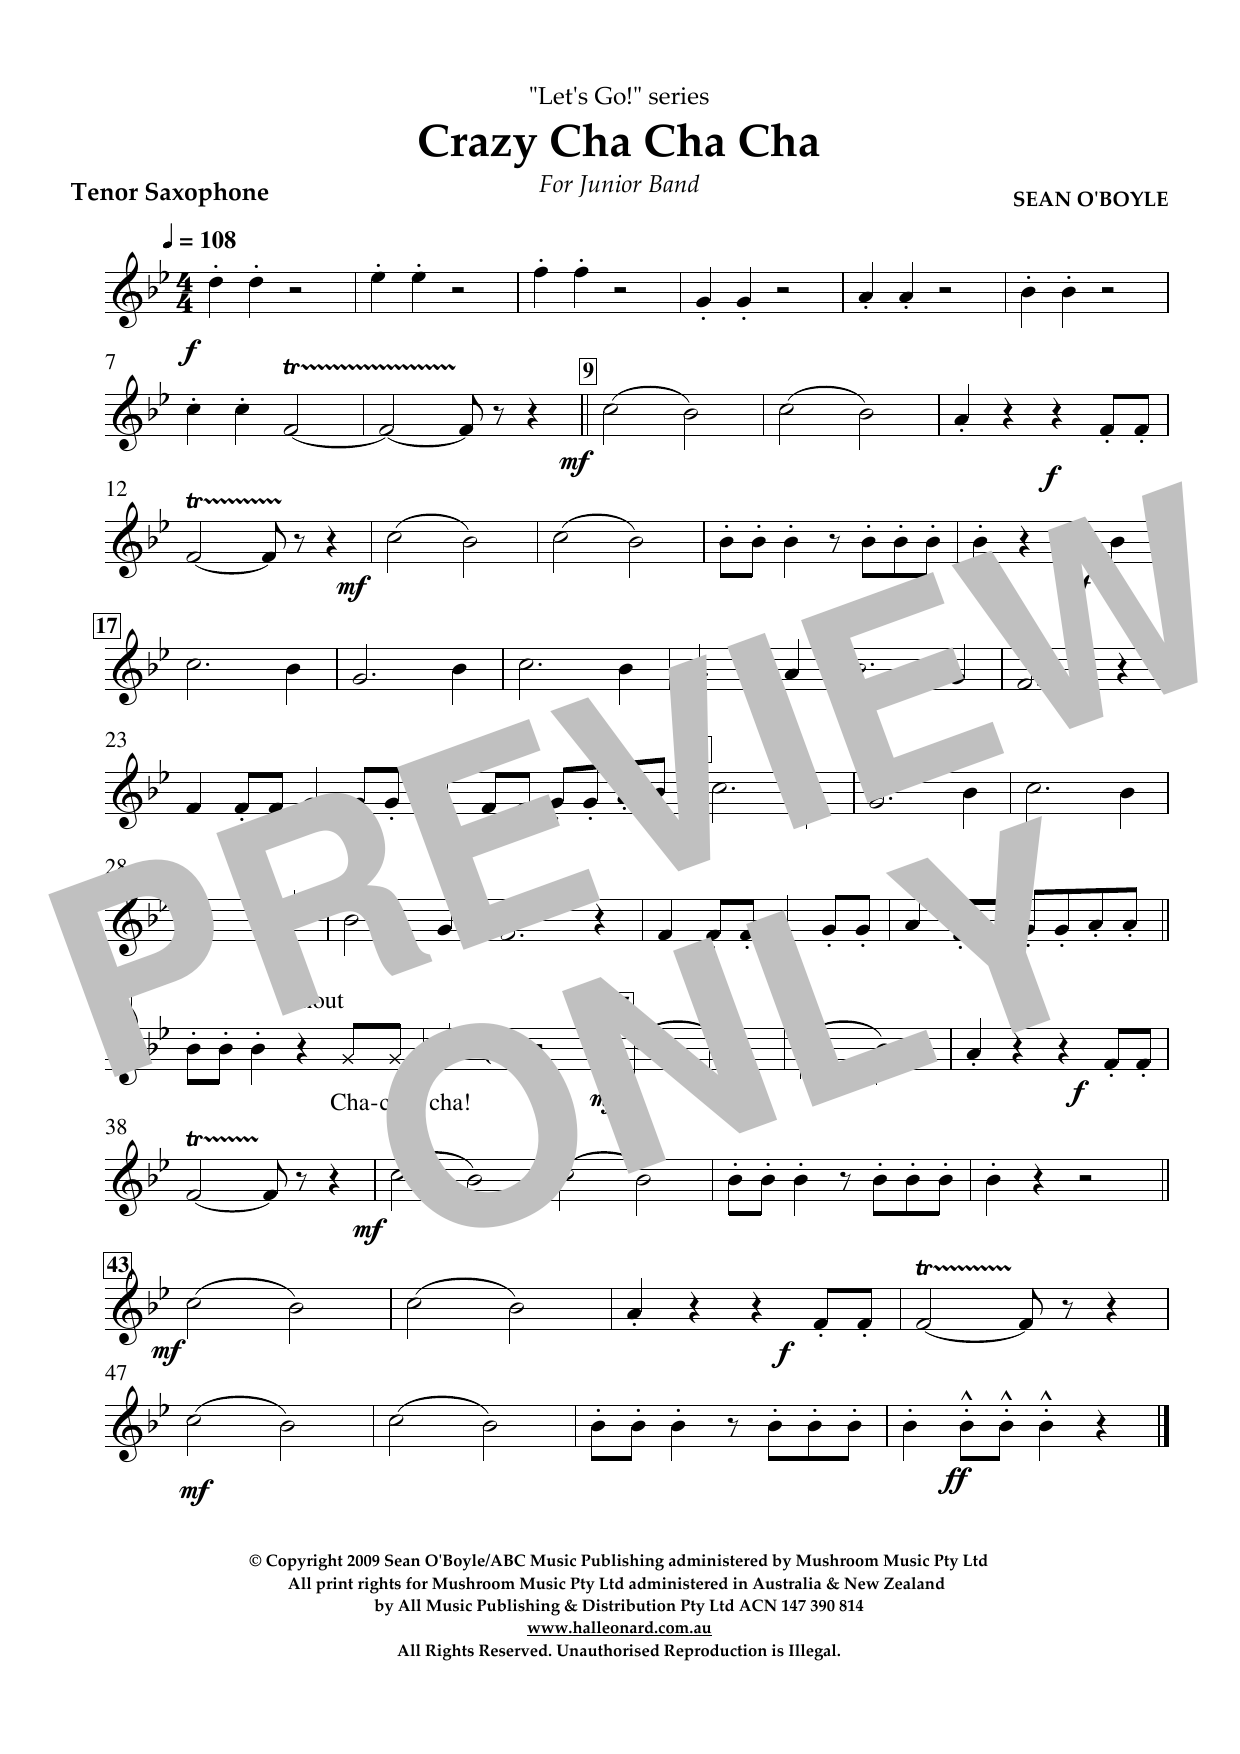 Sean O'Boyle Crazy Cha Cha Cha - Tenor Saxophone Sheet Music Notes & Chords for Concert Band - Download or Print PDF